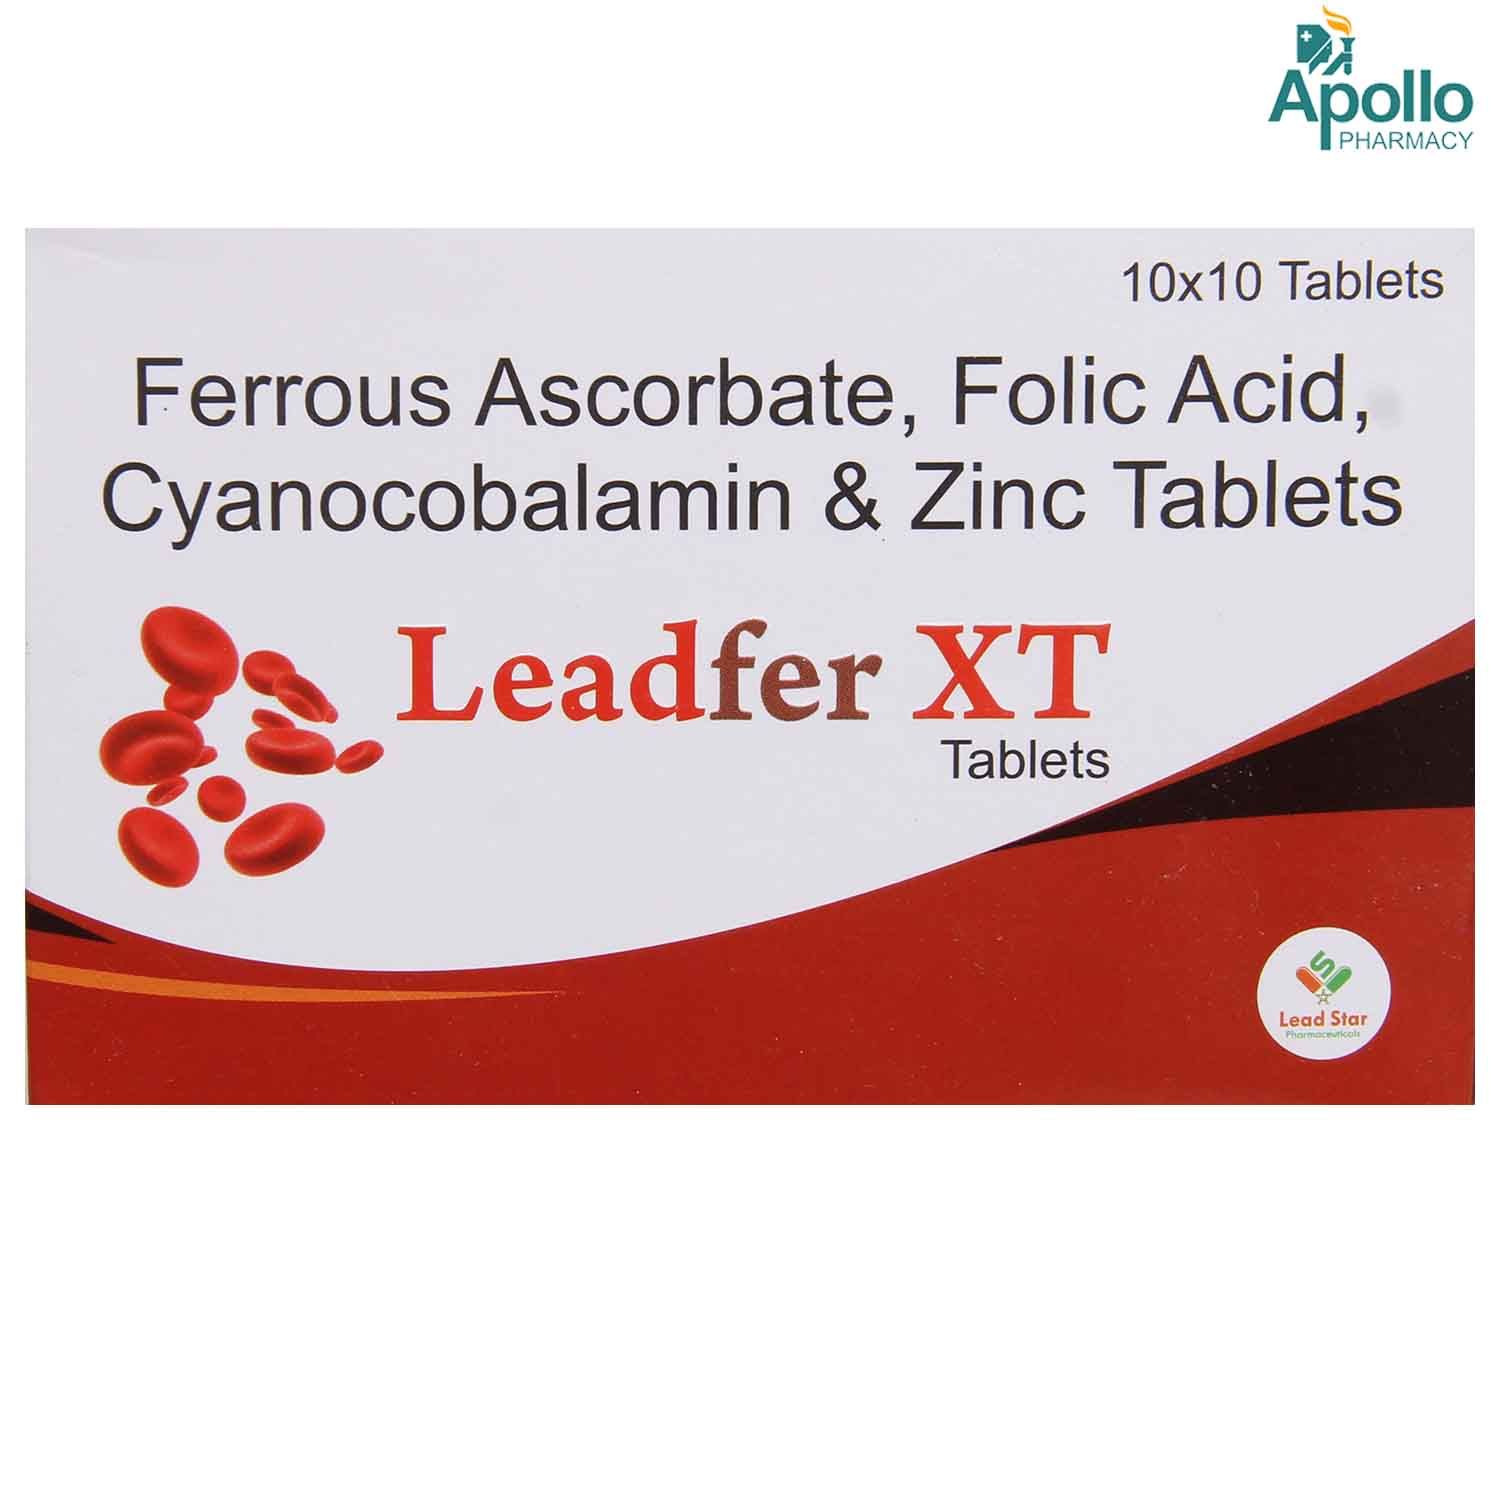 Leadfer XT Tablet 10's, Pack of 10 TABLETS